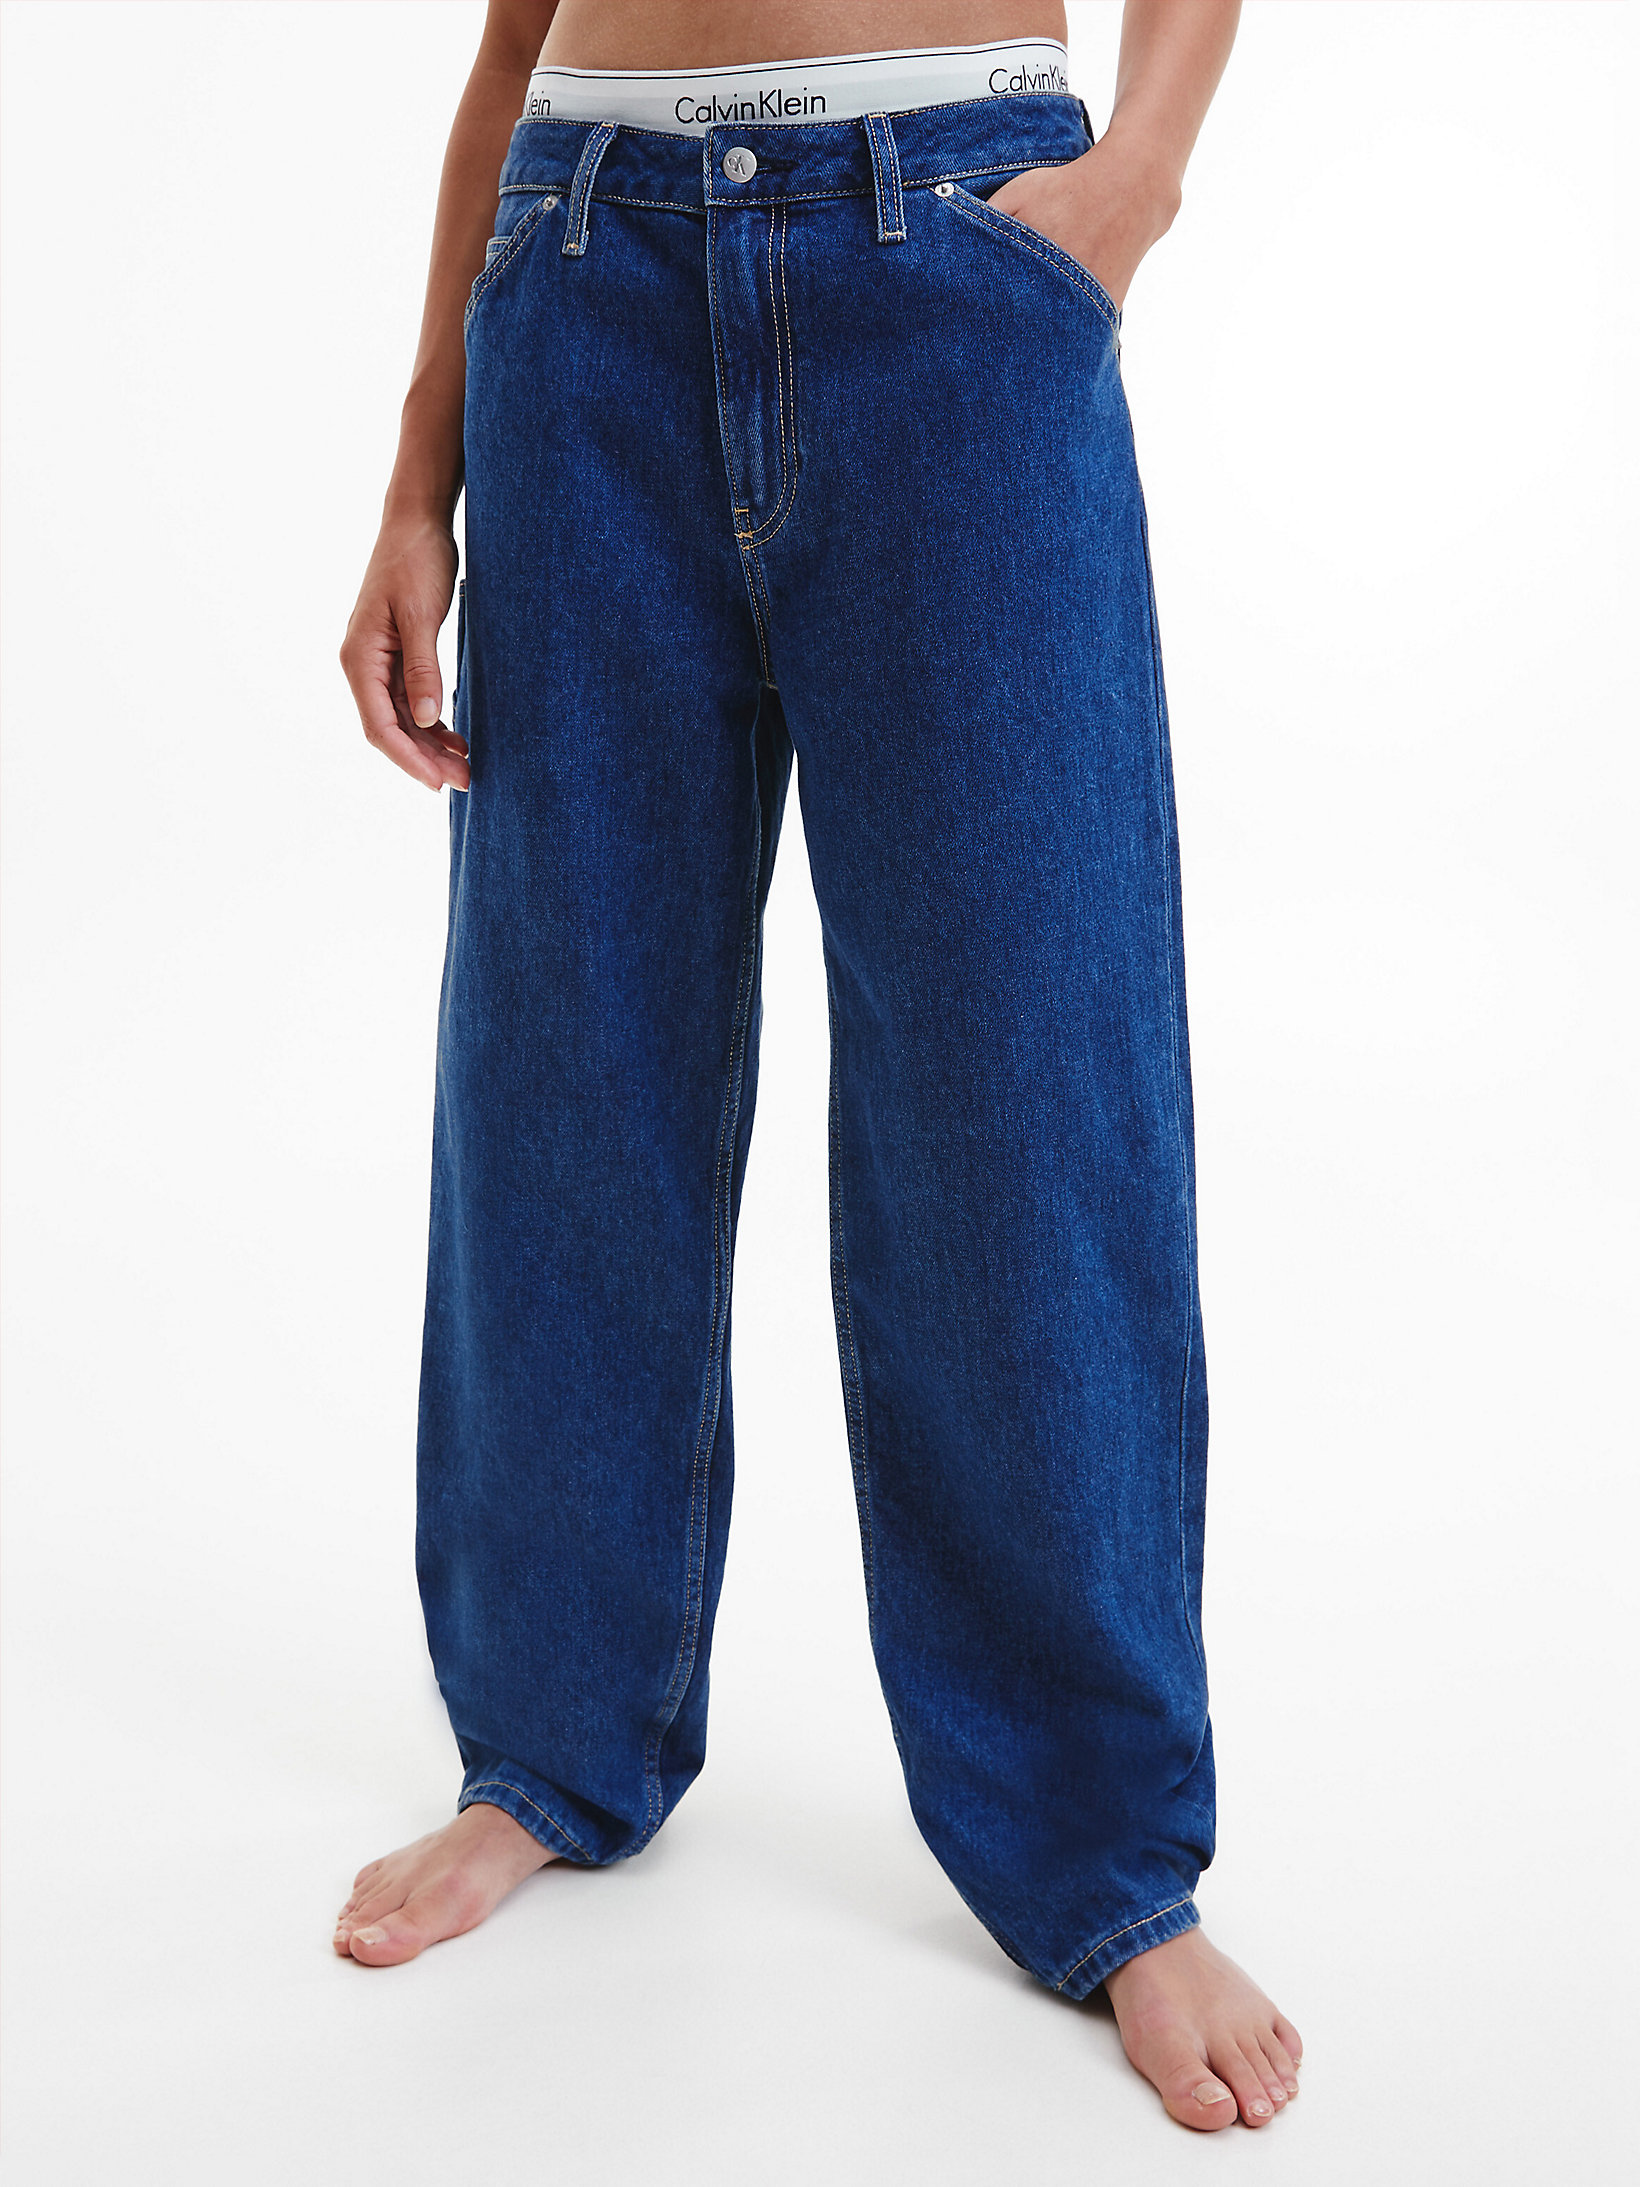 Denim Medium > Функциональные джинсы Straight в стиле 90-х > undefined Женщины - Calvin Klein